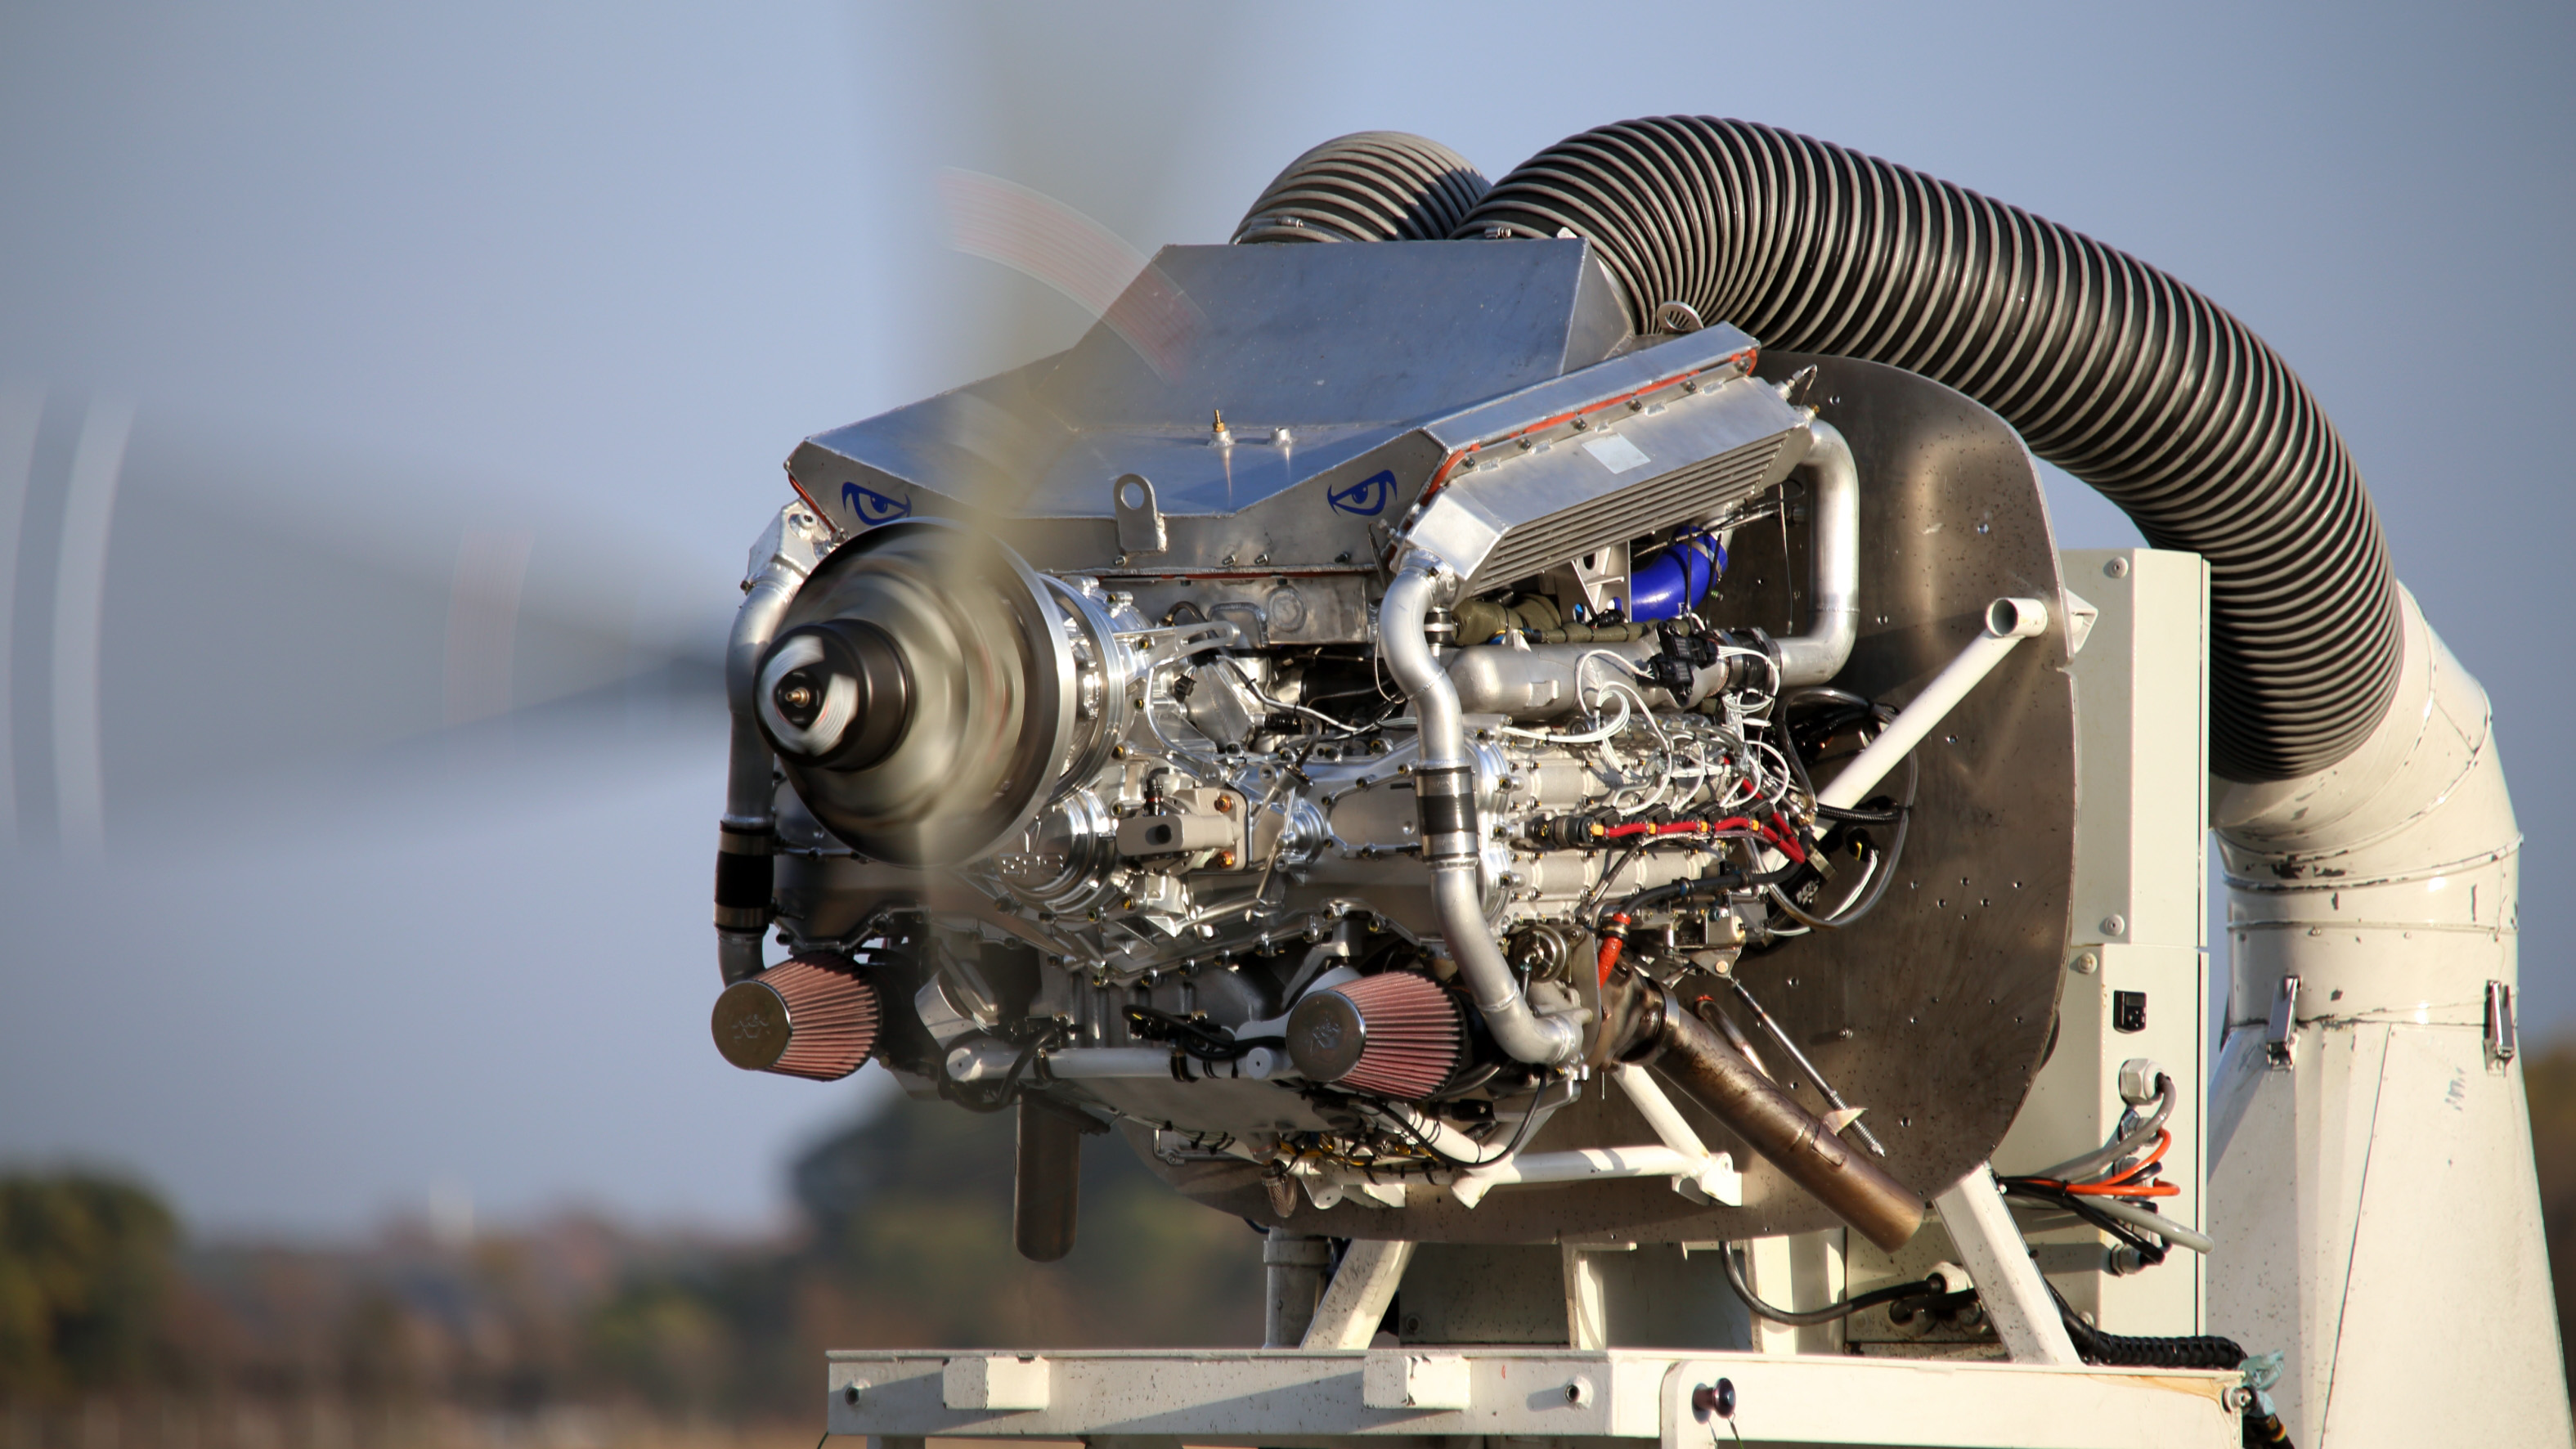 90 сильный двигатель. Авиационный дизель Ач-30. Авиационный дизельный двигатель м-40. Engineered Propulsion Systems Graflight v-8. Weslake a80 Diesel aircraft engine.